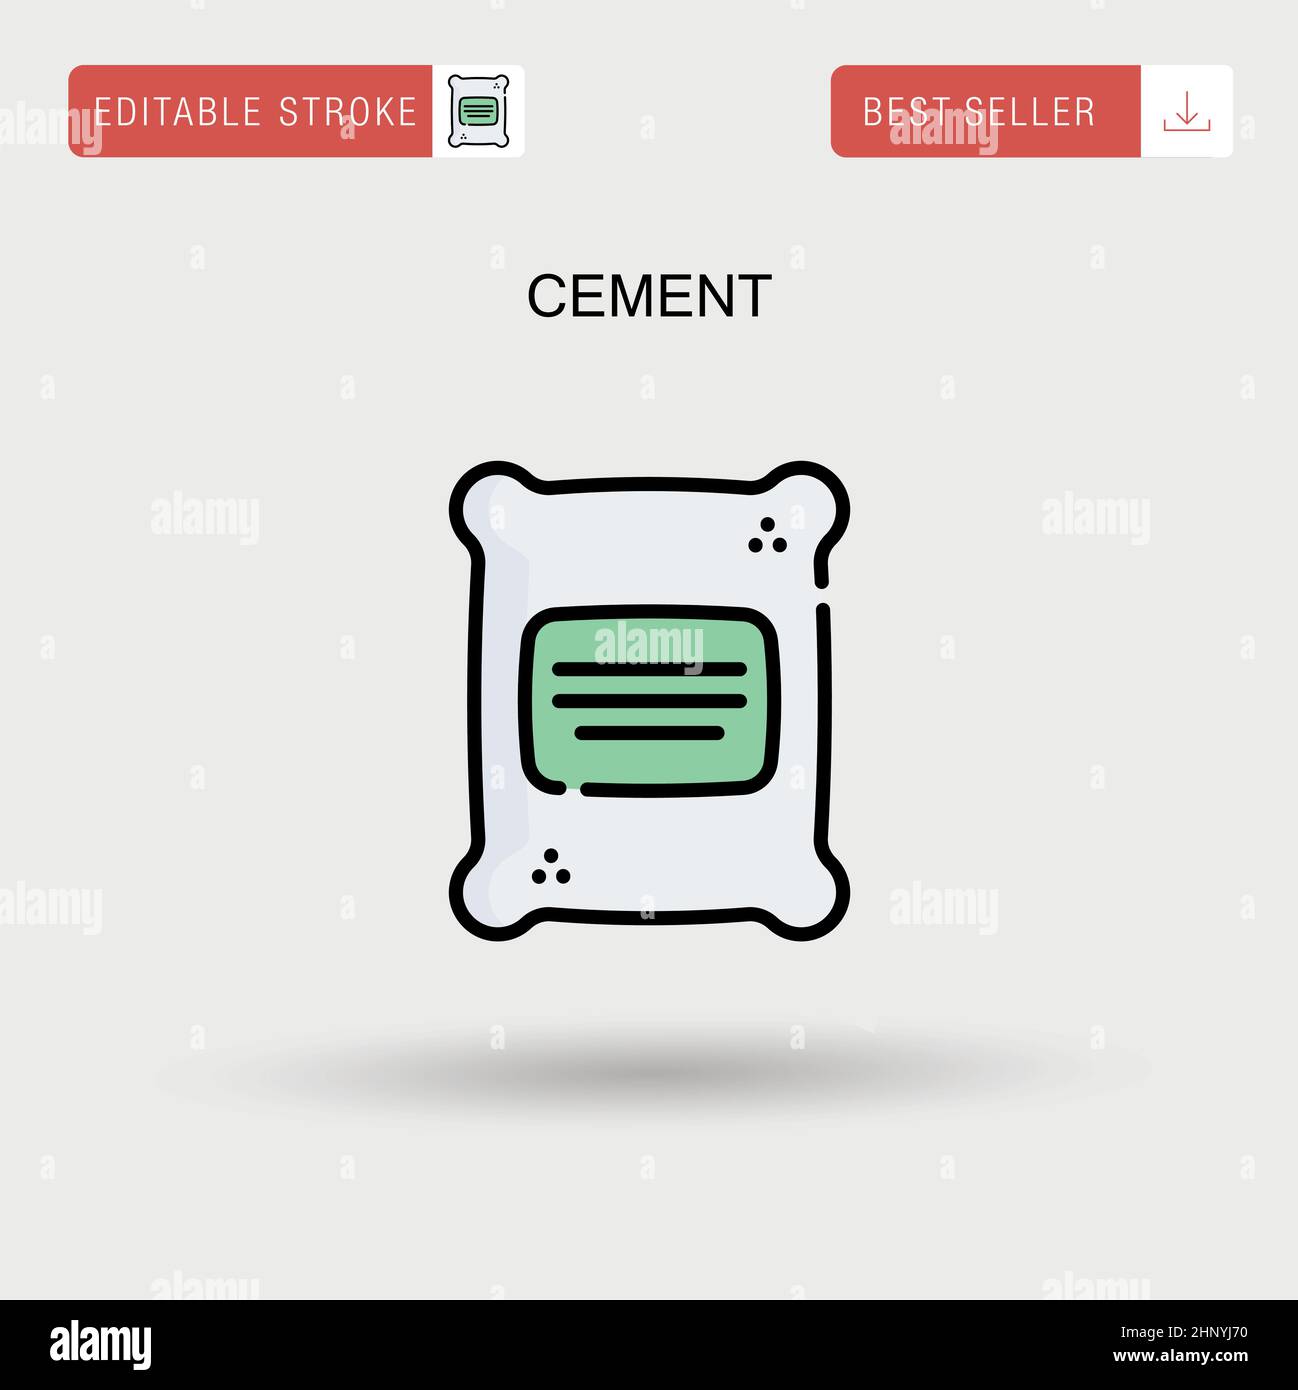 Cement Simple vector icon. Stock Vector